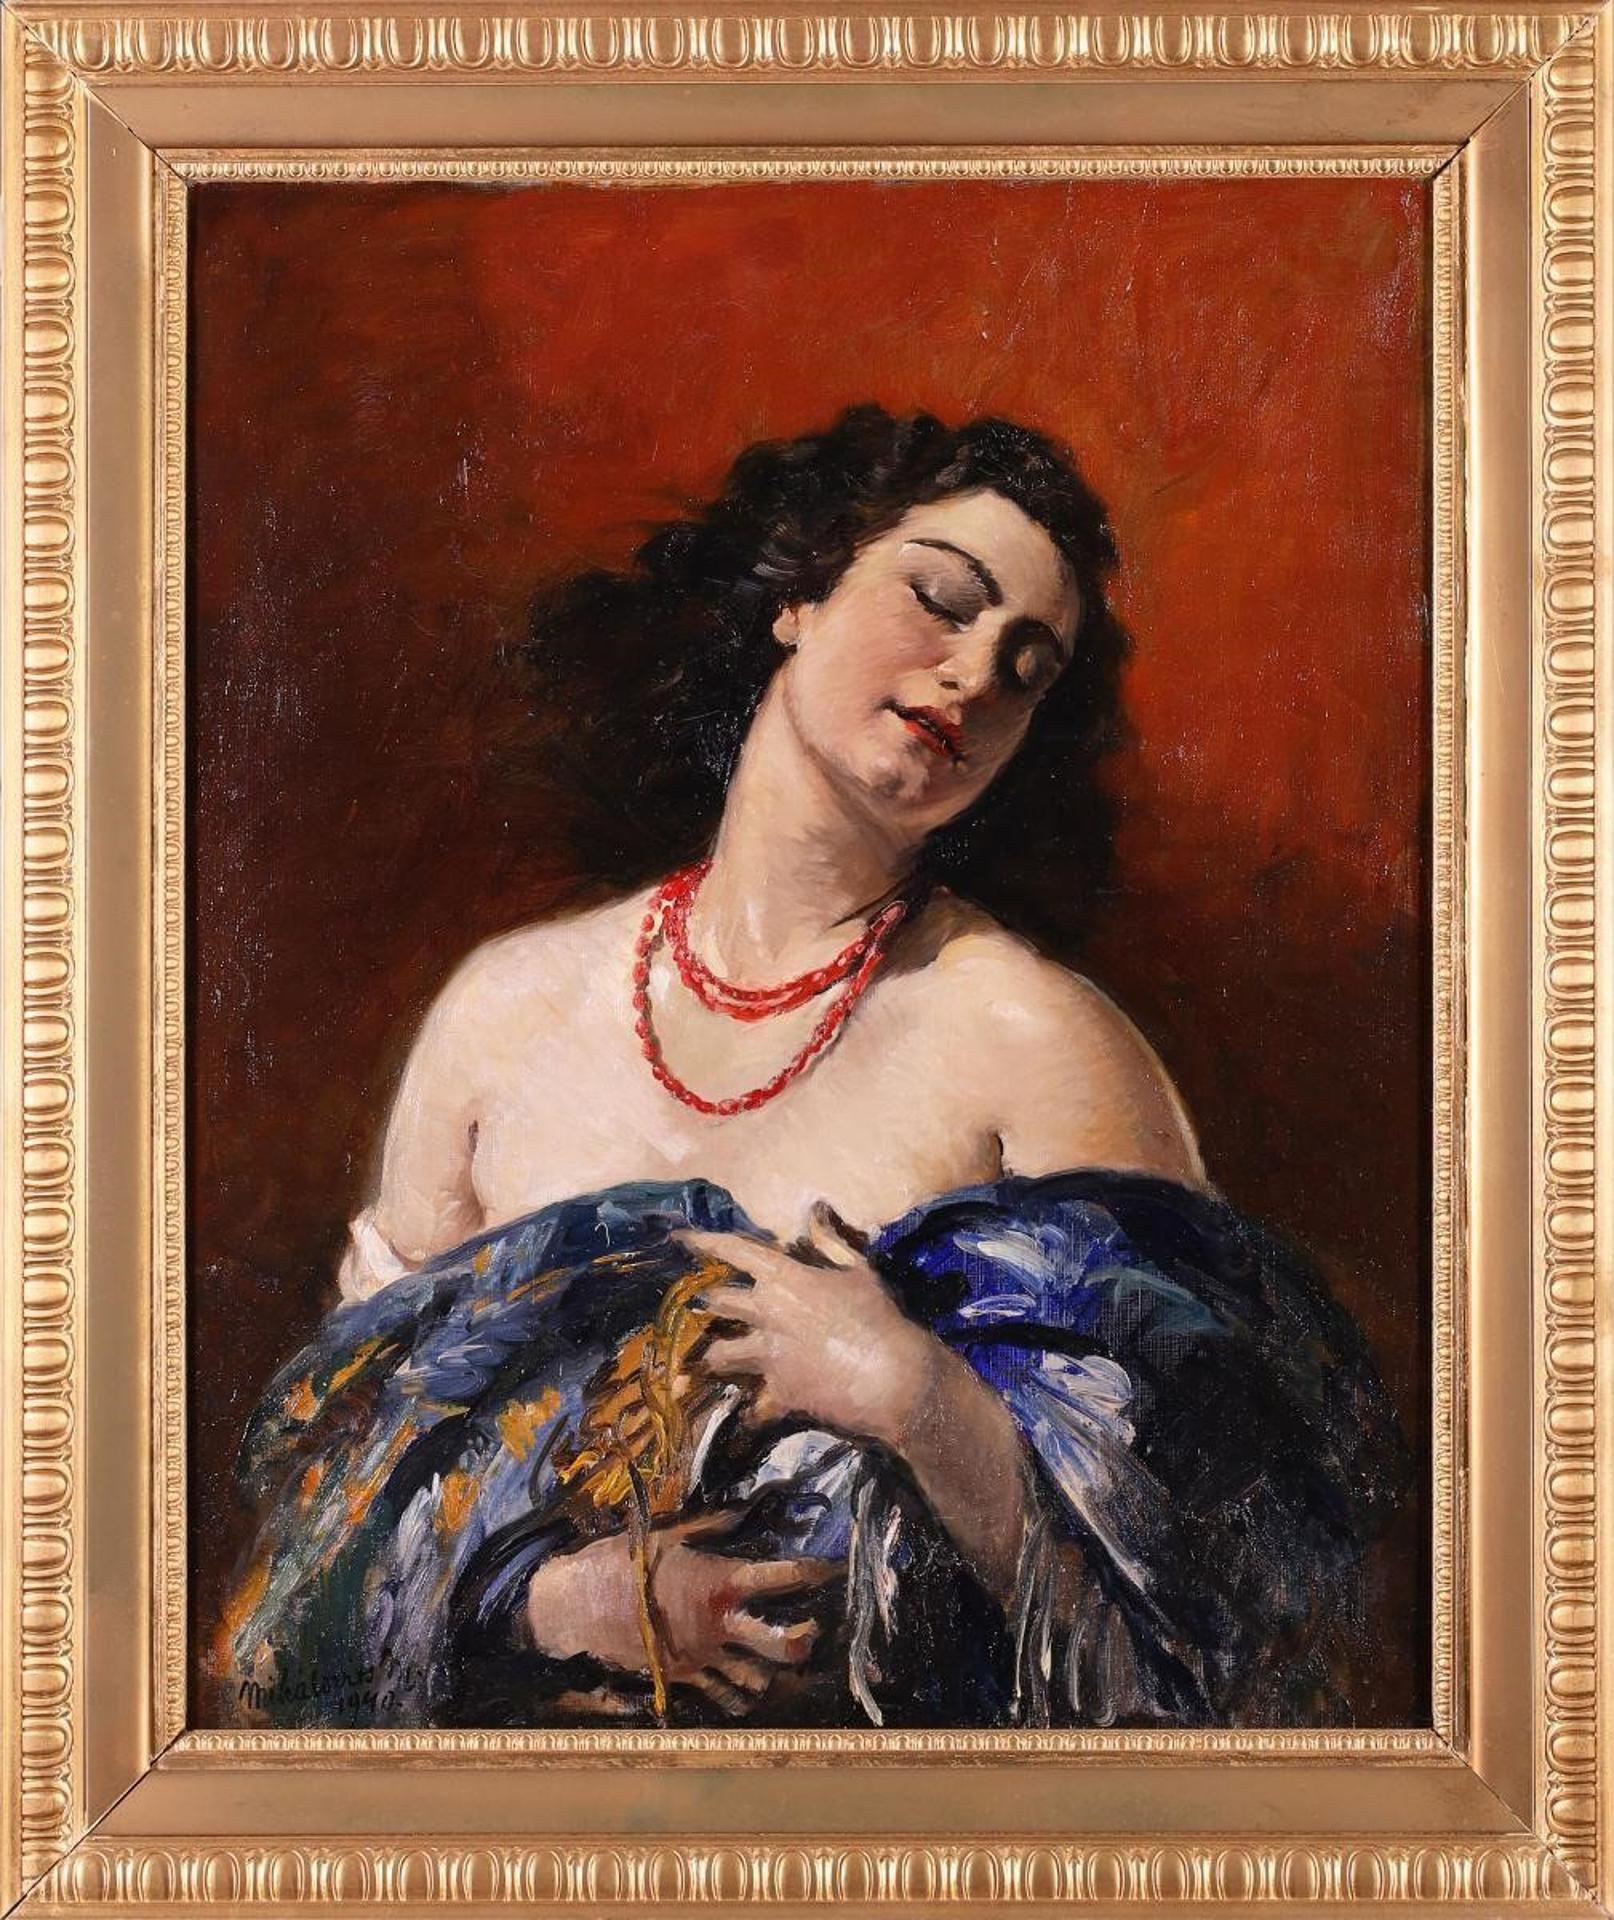 Miklos Nickolas Mihalovits (1888-1960) - Portrait of a Woman (Reverie); 1940